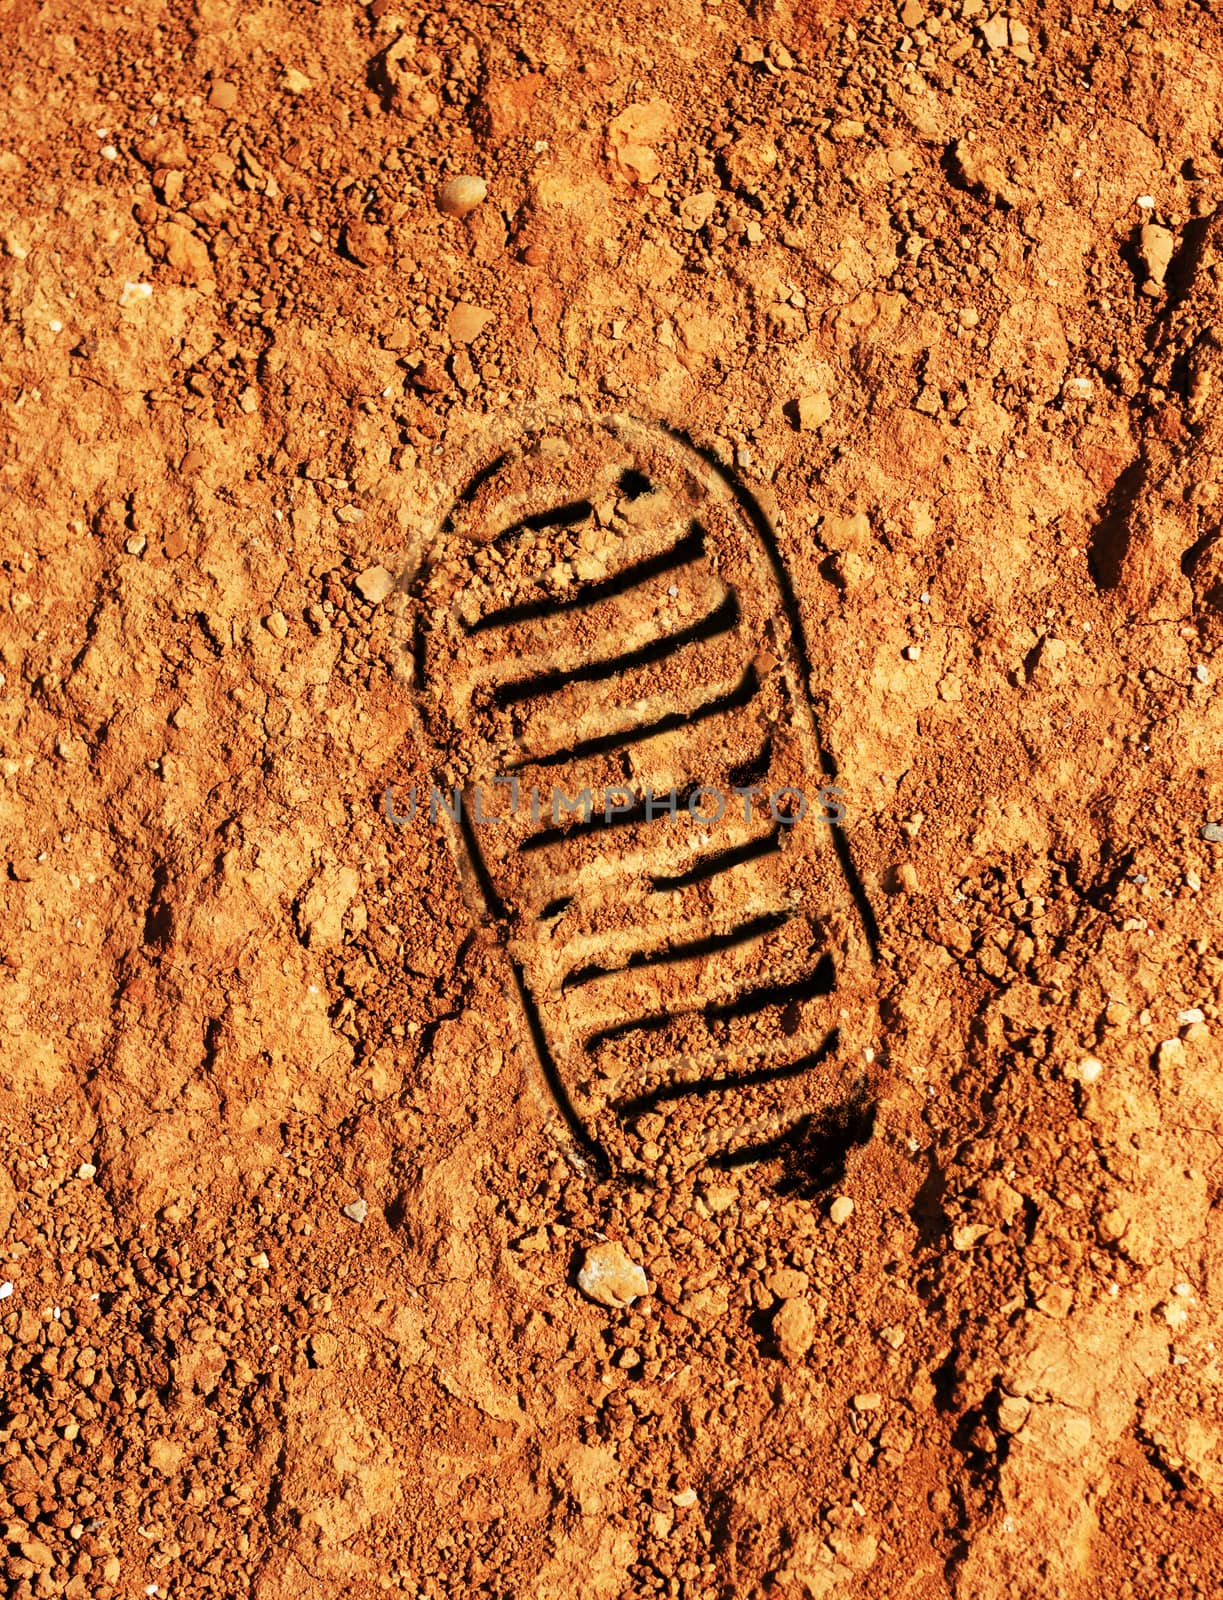 Astronaut footprint on red Martian soil by anterovium